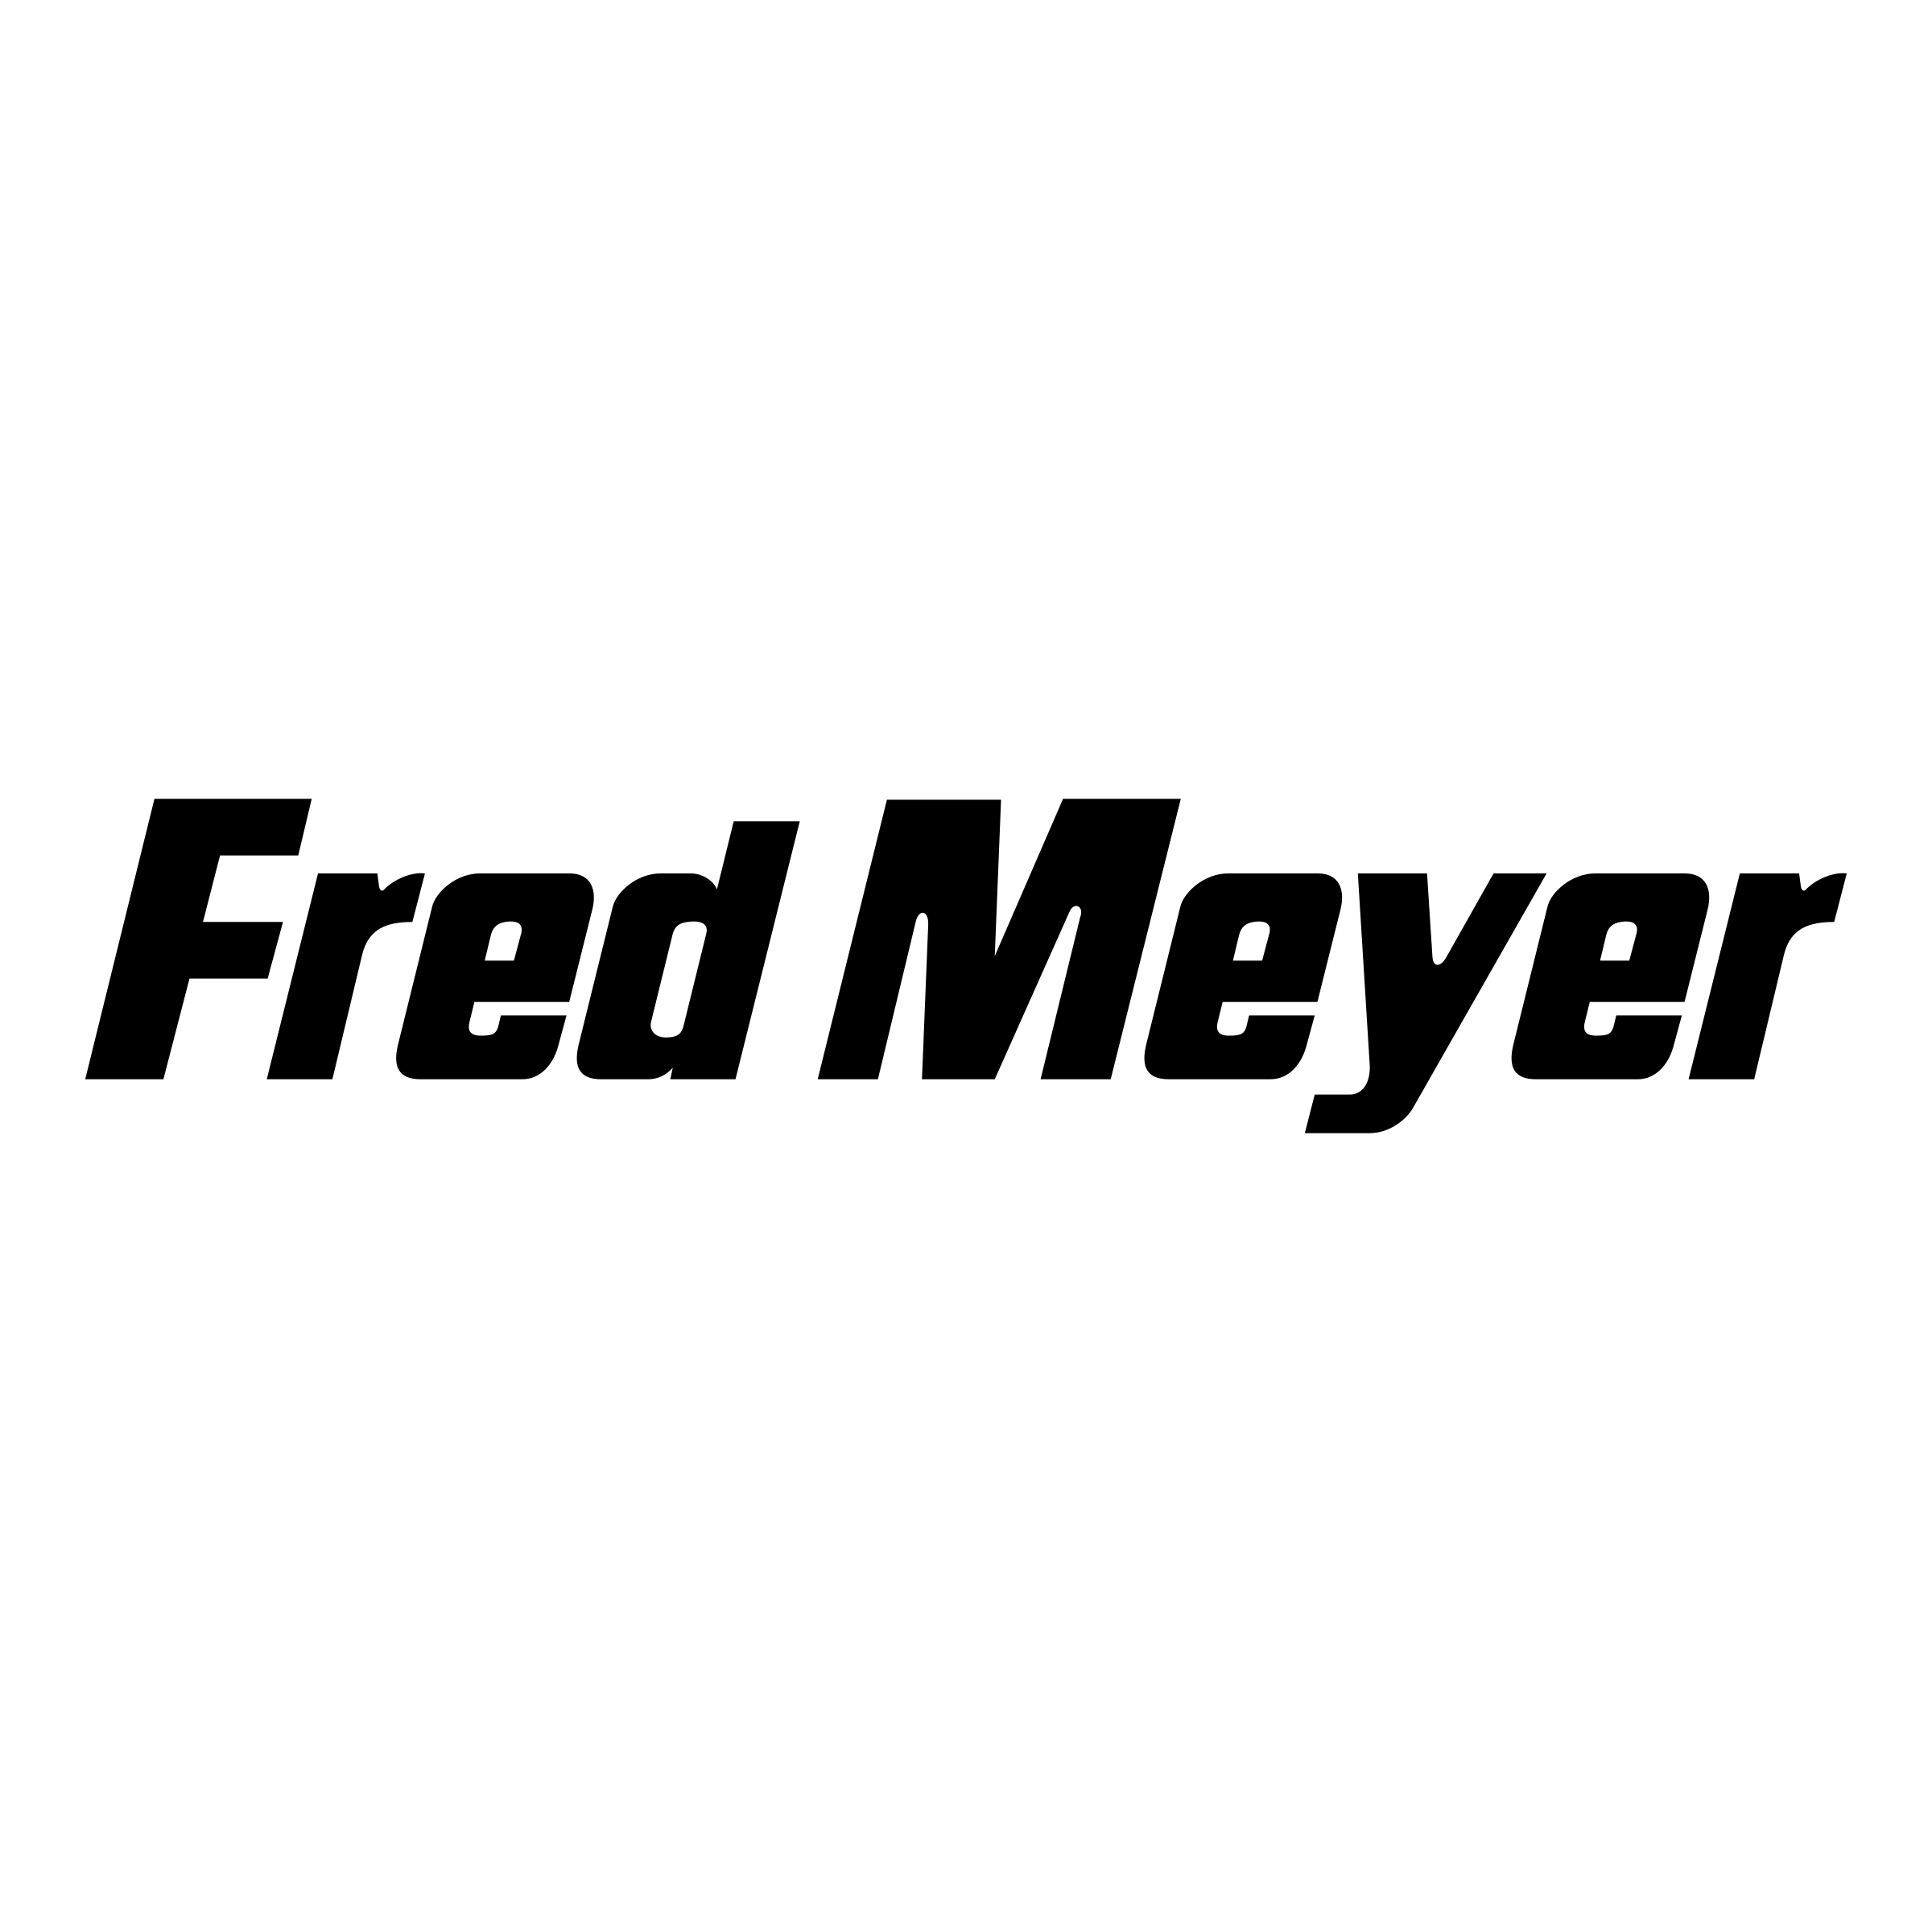 Myer Logo - Fred Myer Logo PNG Transparent & SVG Vector - Freebie Supply